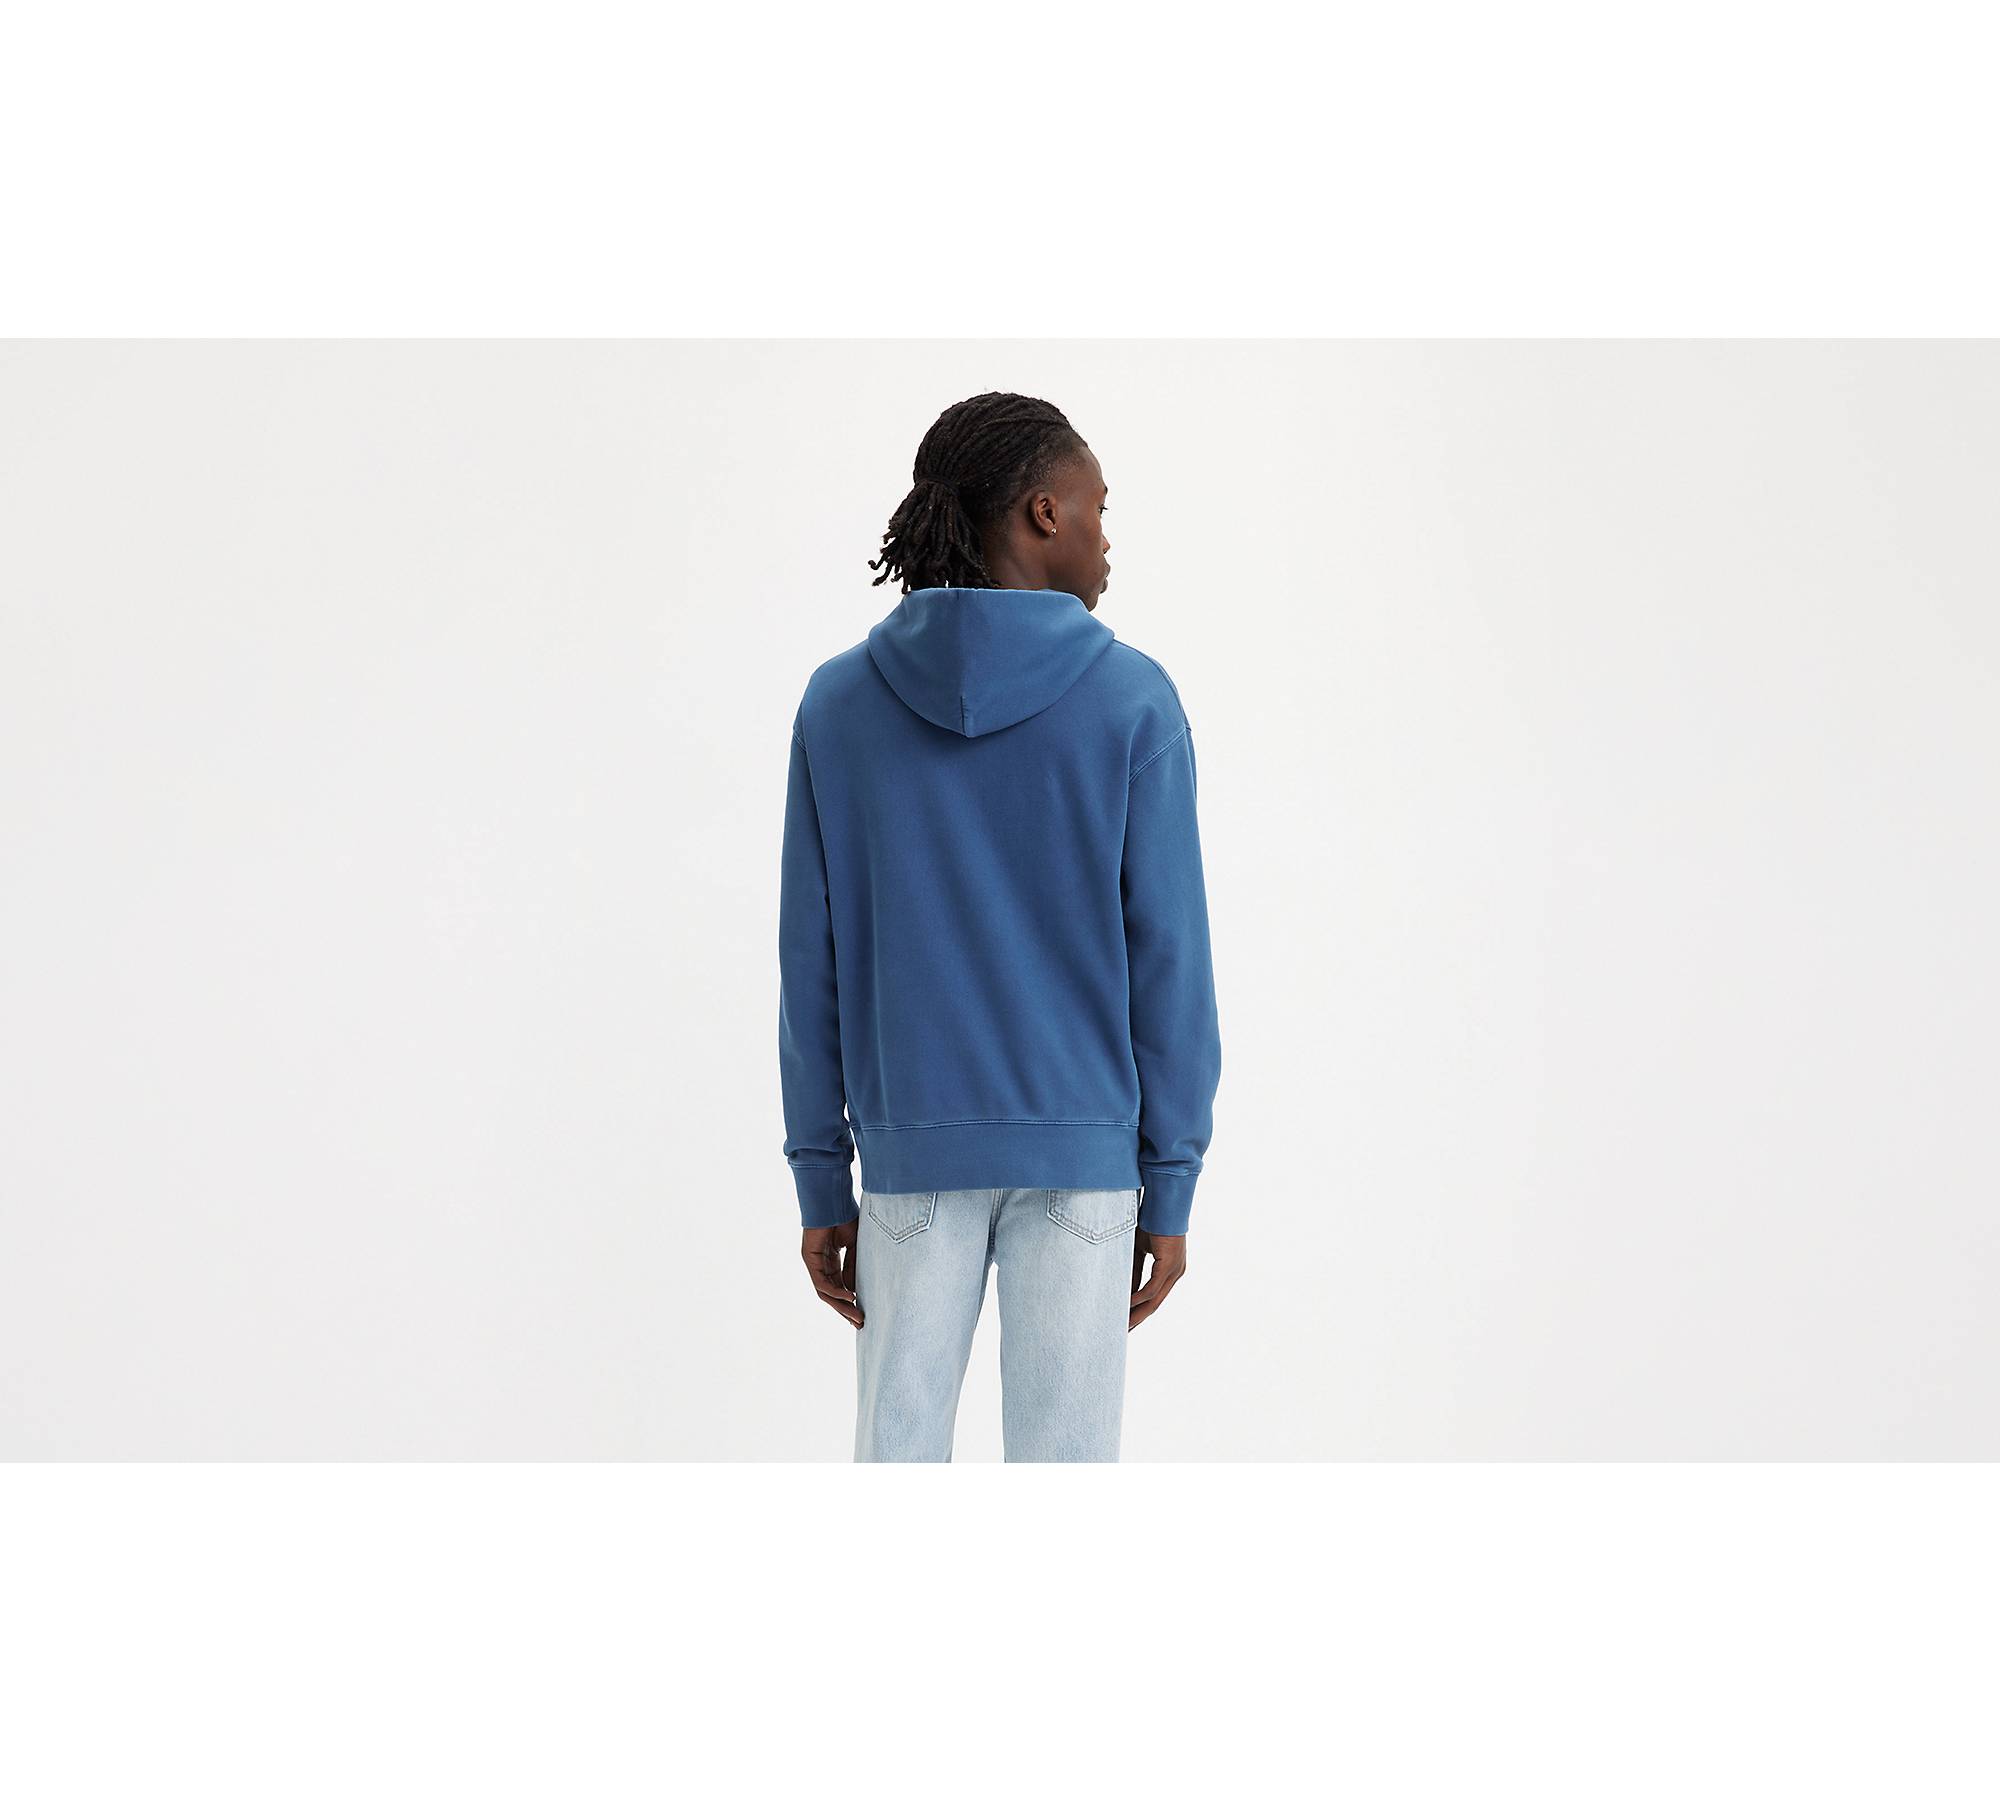 Authentic Graphic Hoodie Sweatshirt - Blue